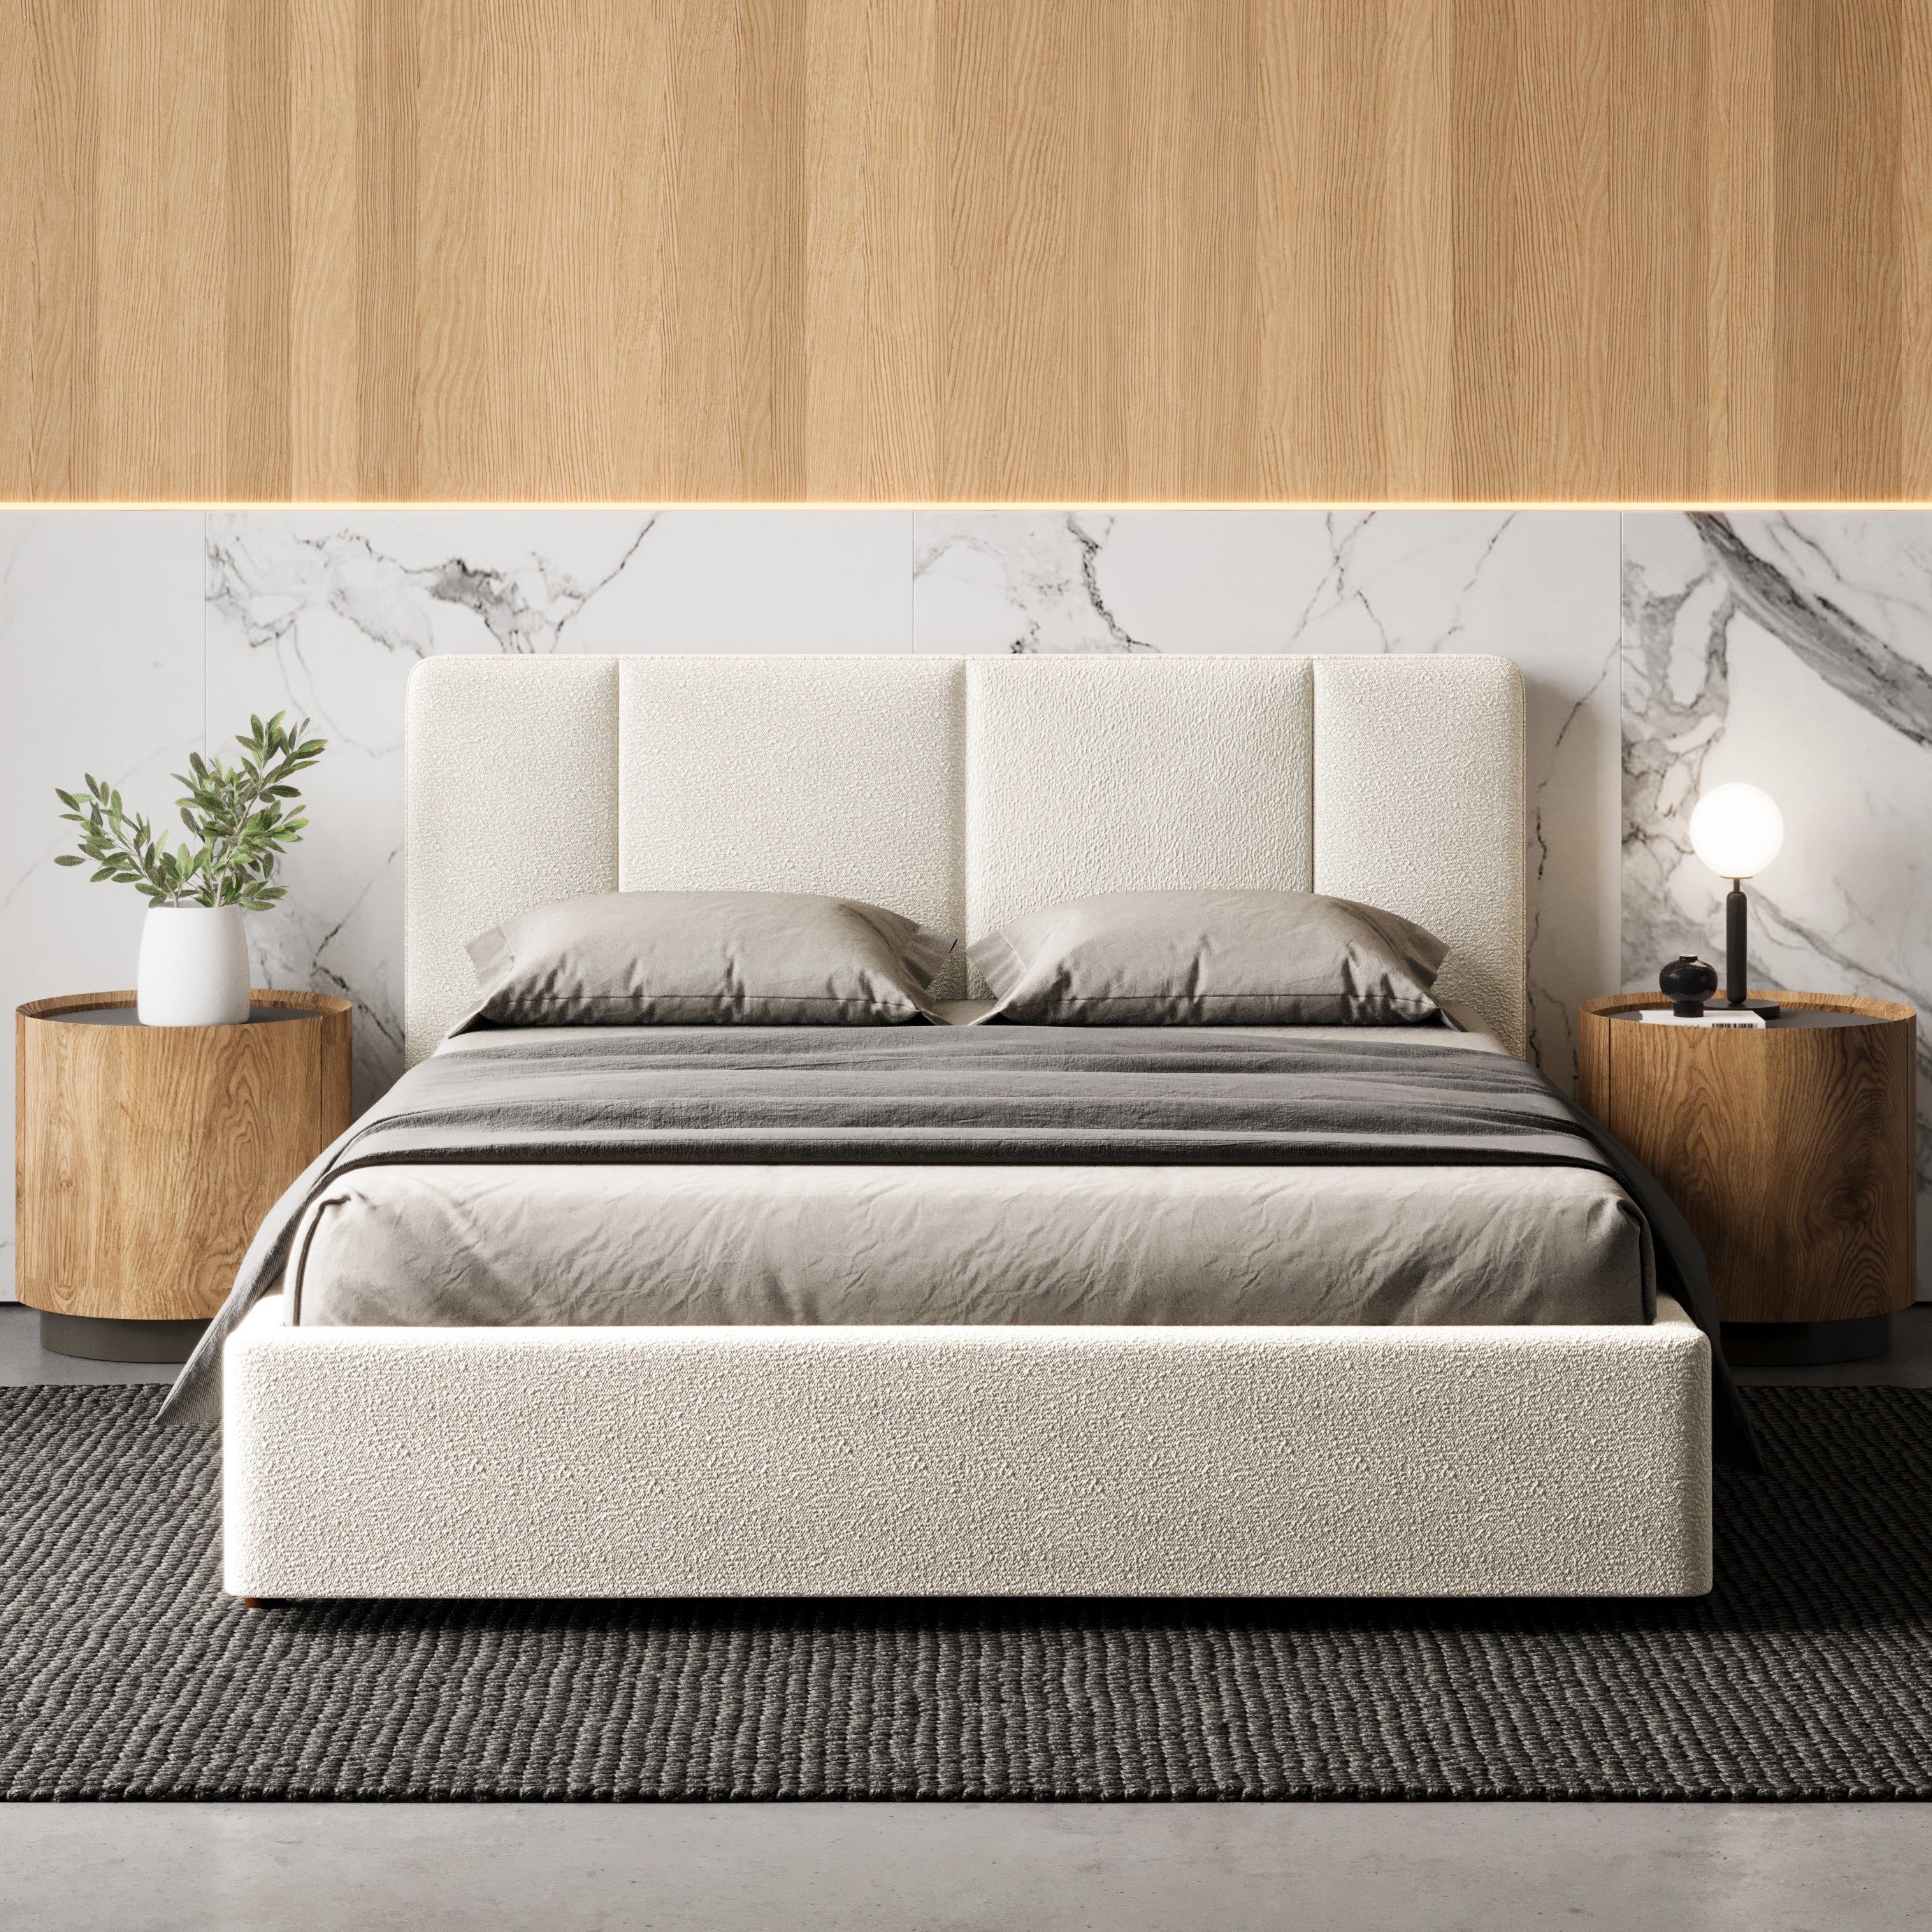 Venice Upholstered Platform Queen Bed, Cream Beige Boucle Fabric